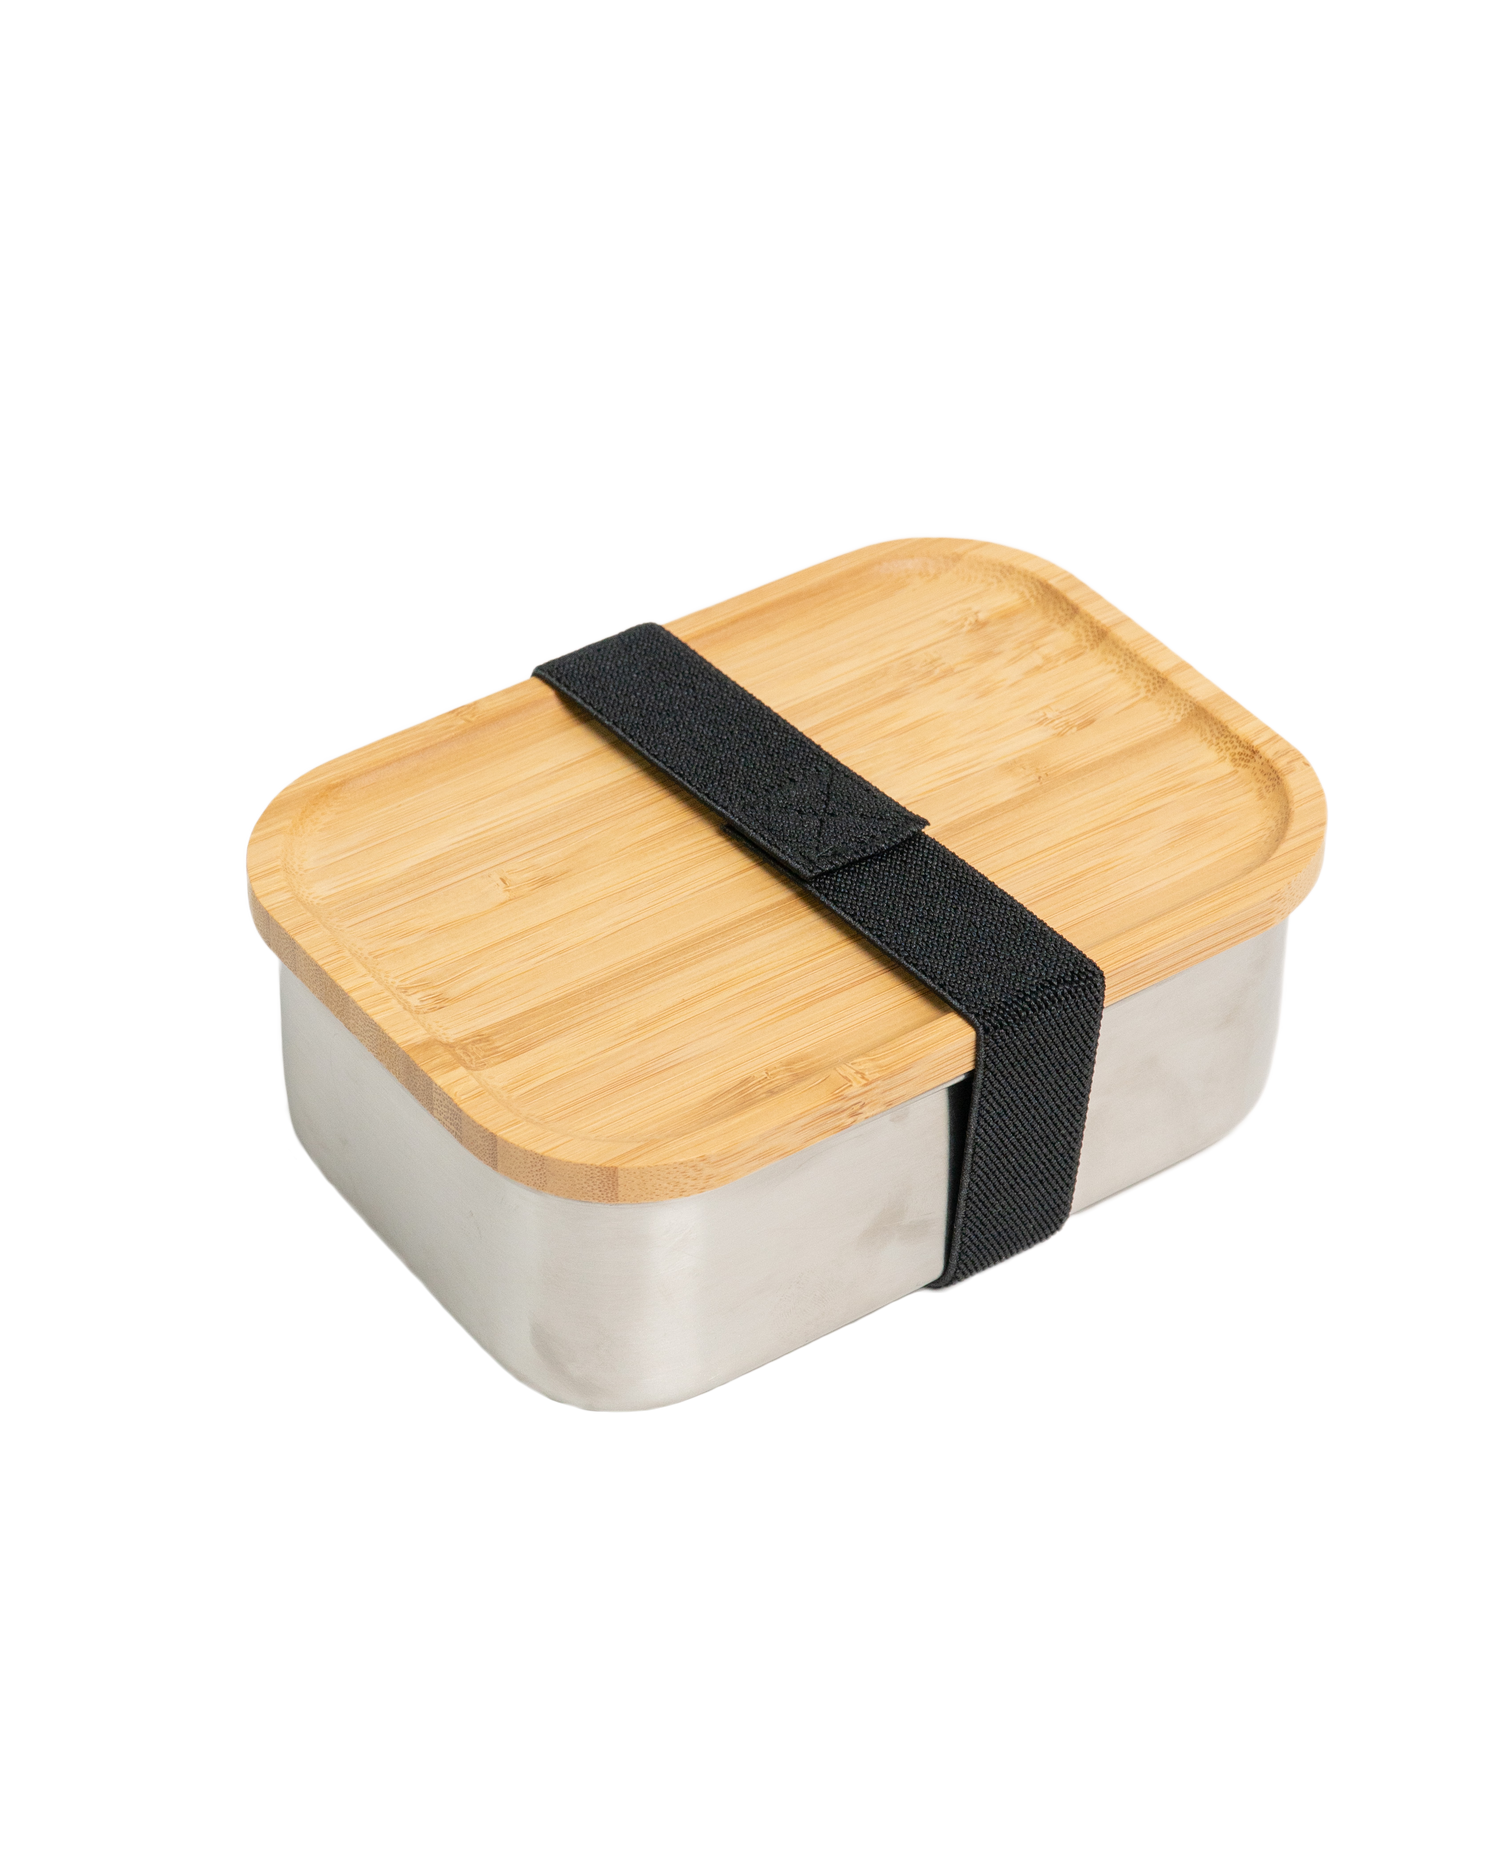 Bamboo Lunch Box